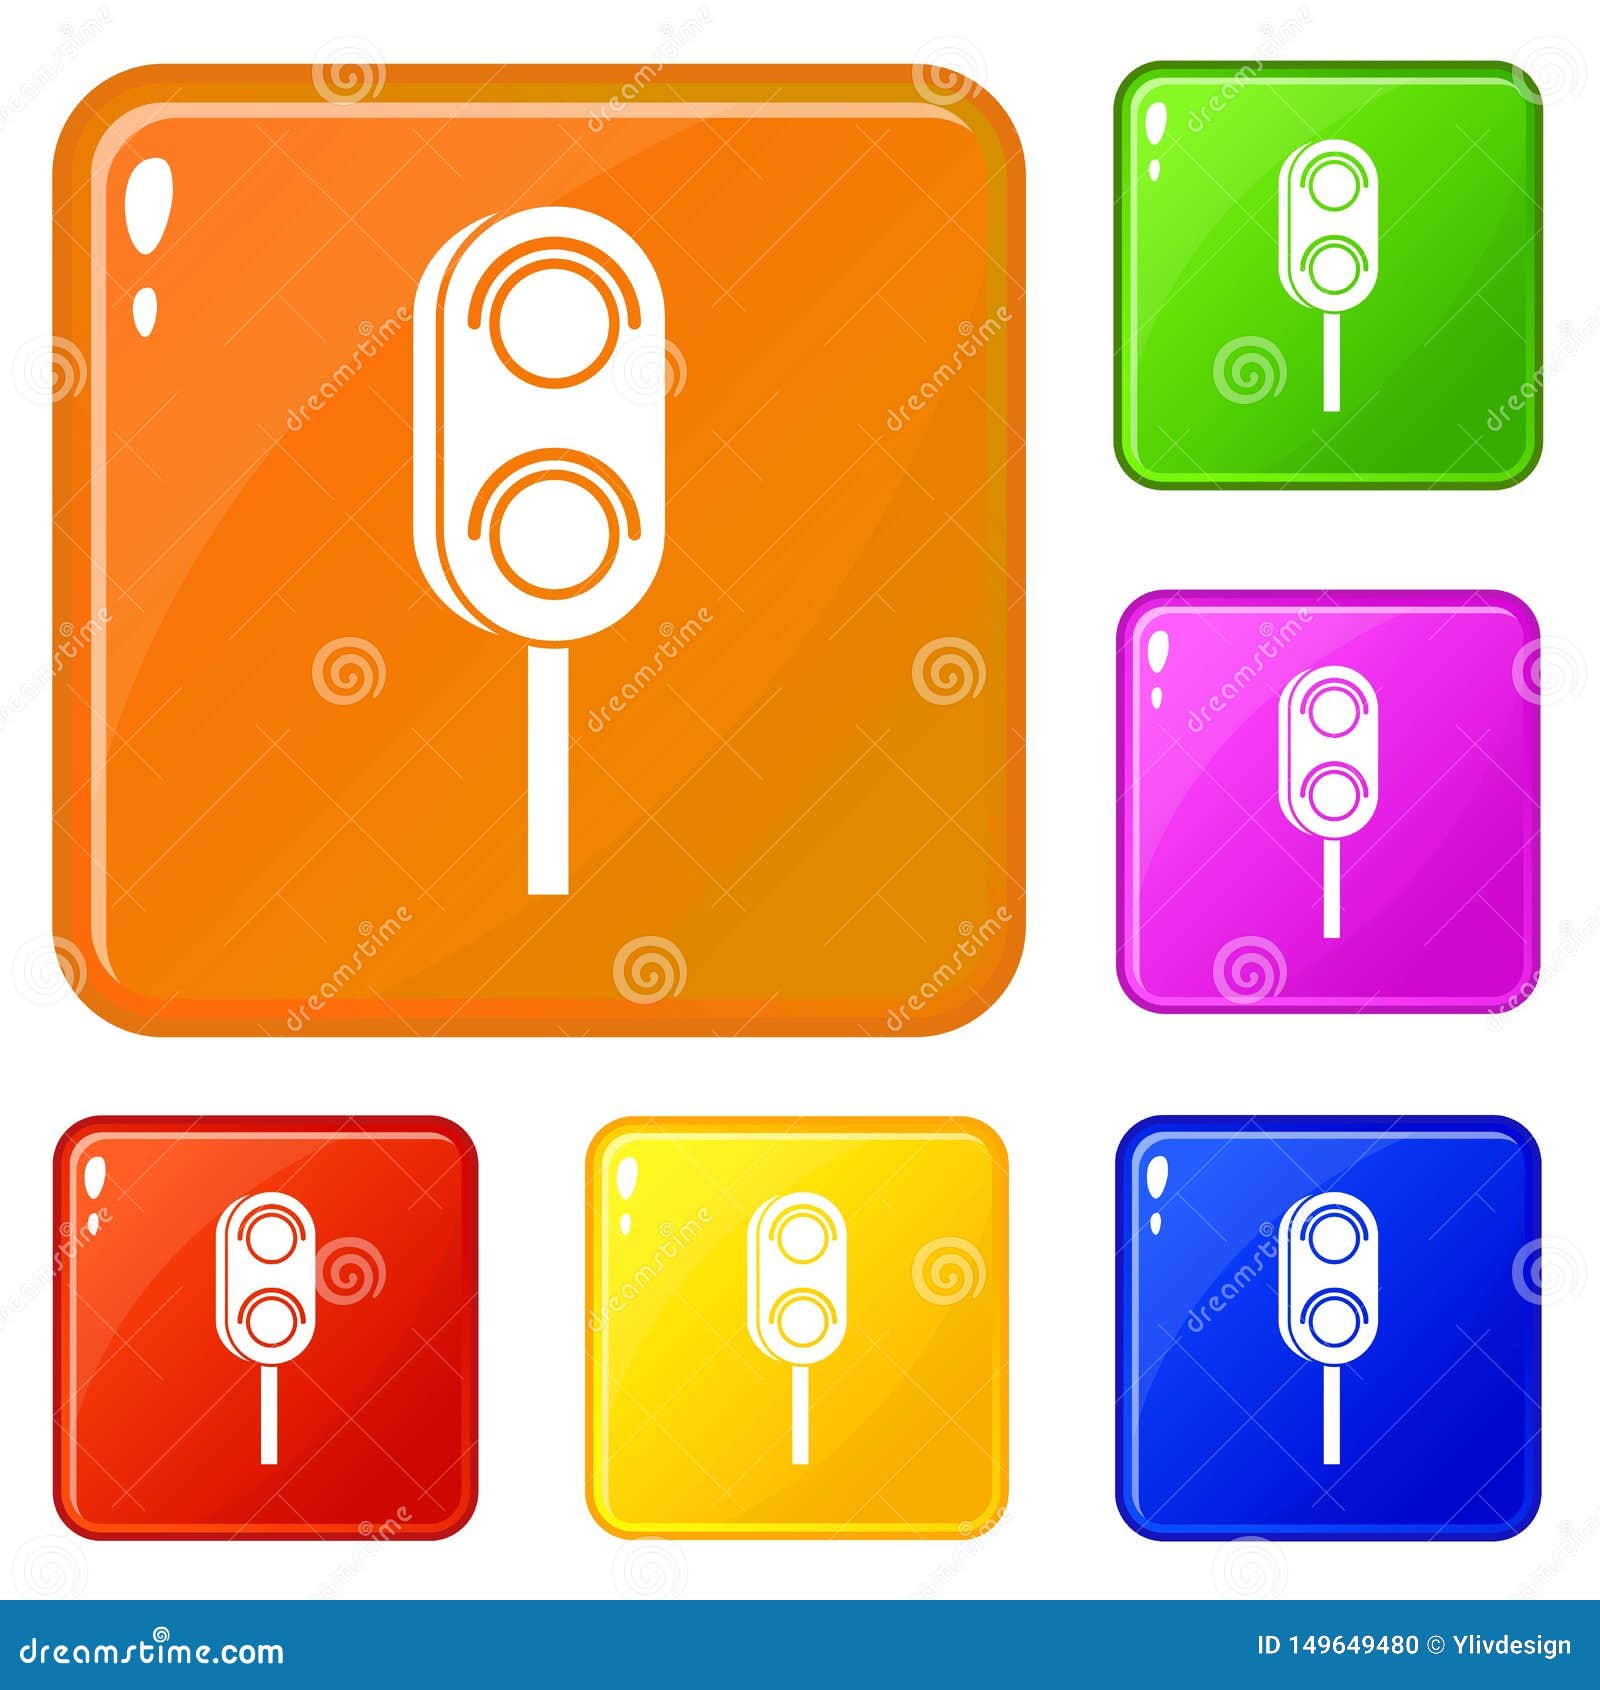 semaphore trafficlight icons set  color